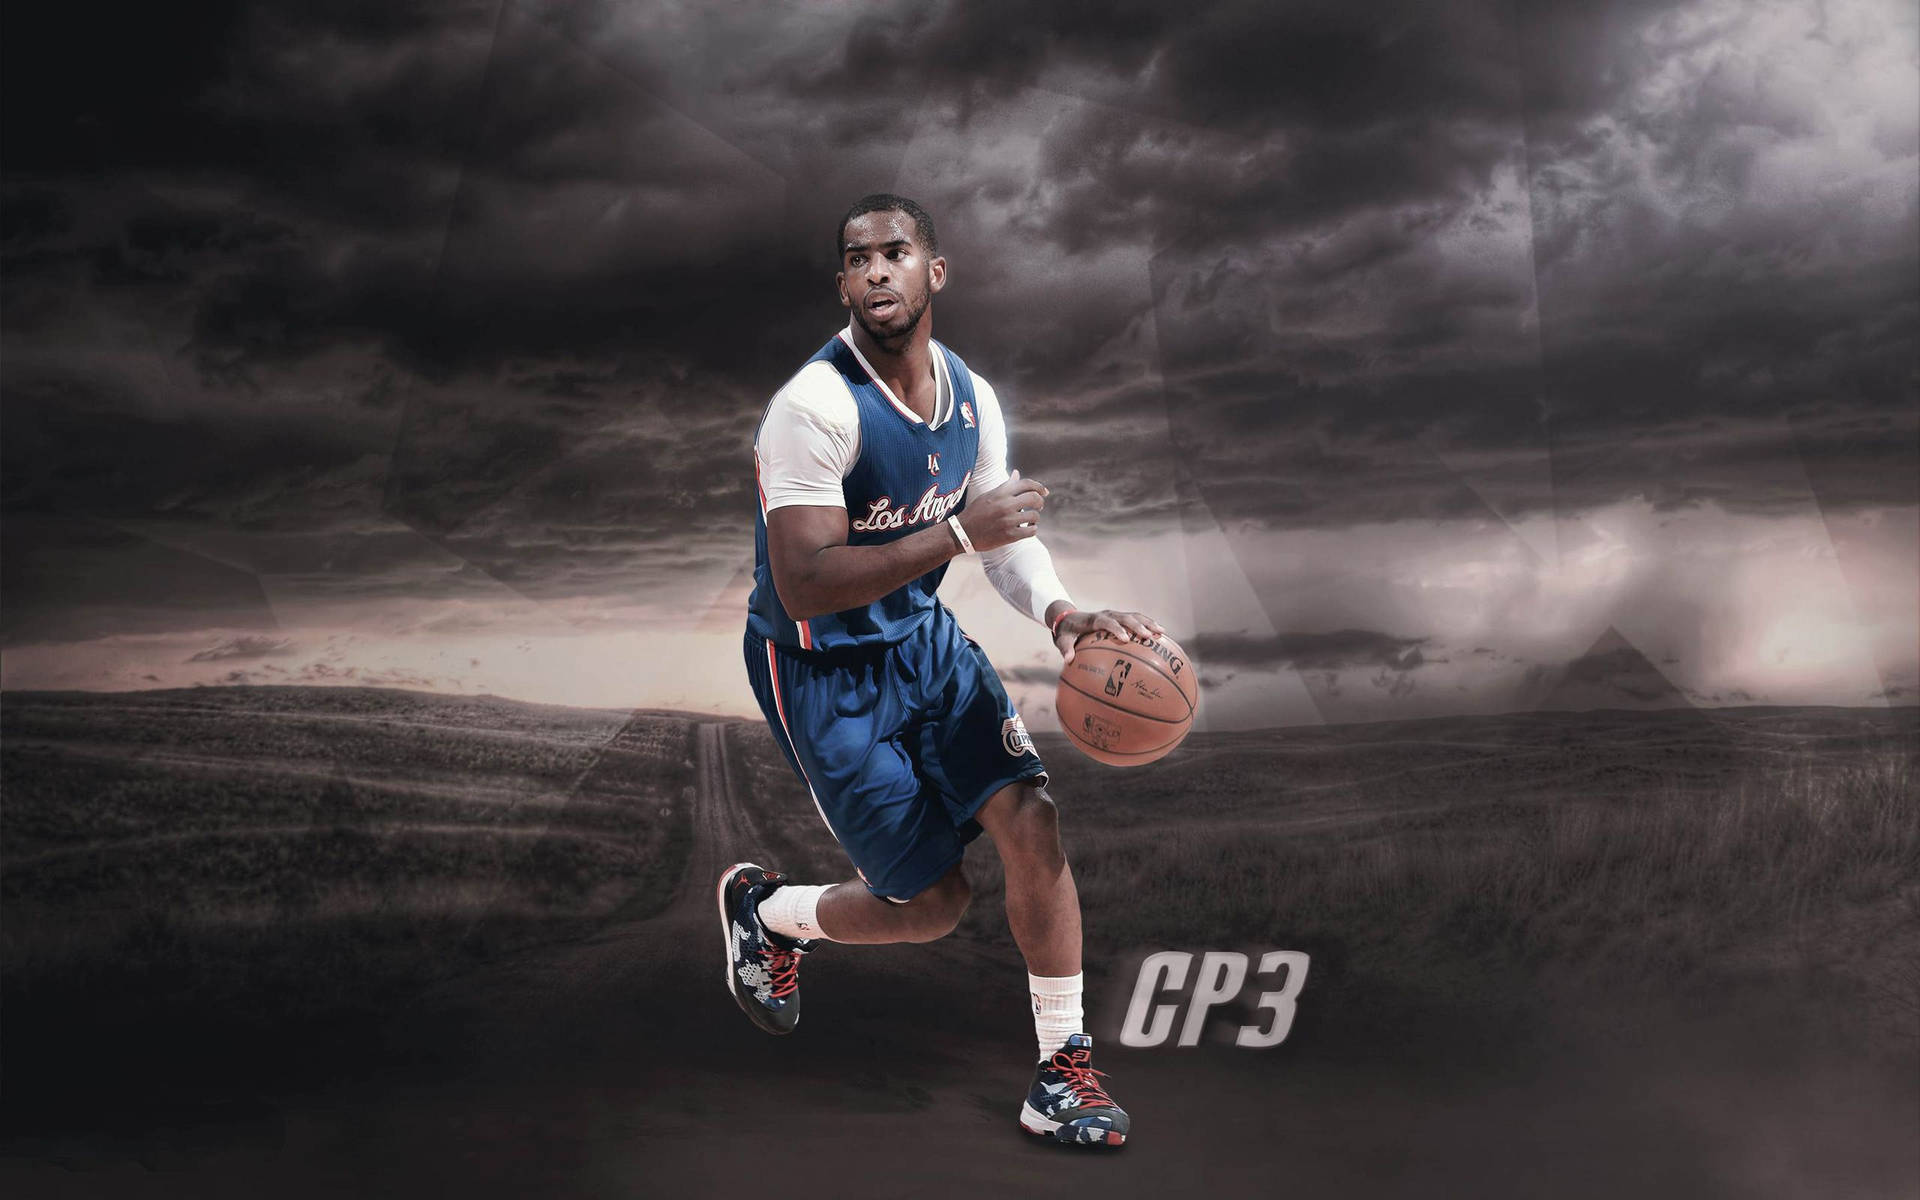 Chrispaul Cp3 Clippers (in German): Chris Paul Cp3 Clippers Wallpaper